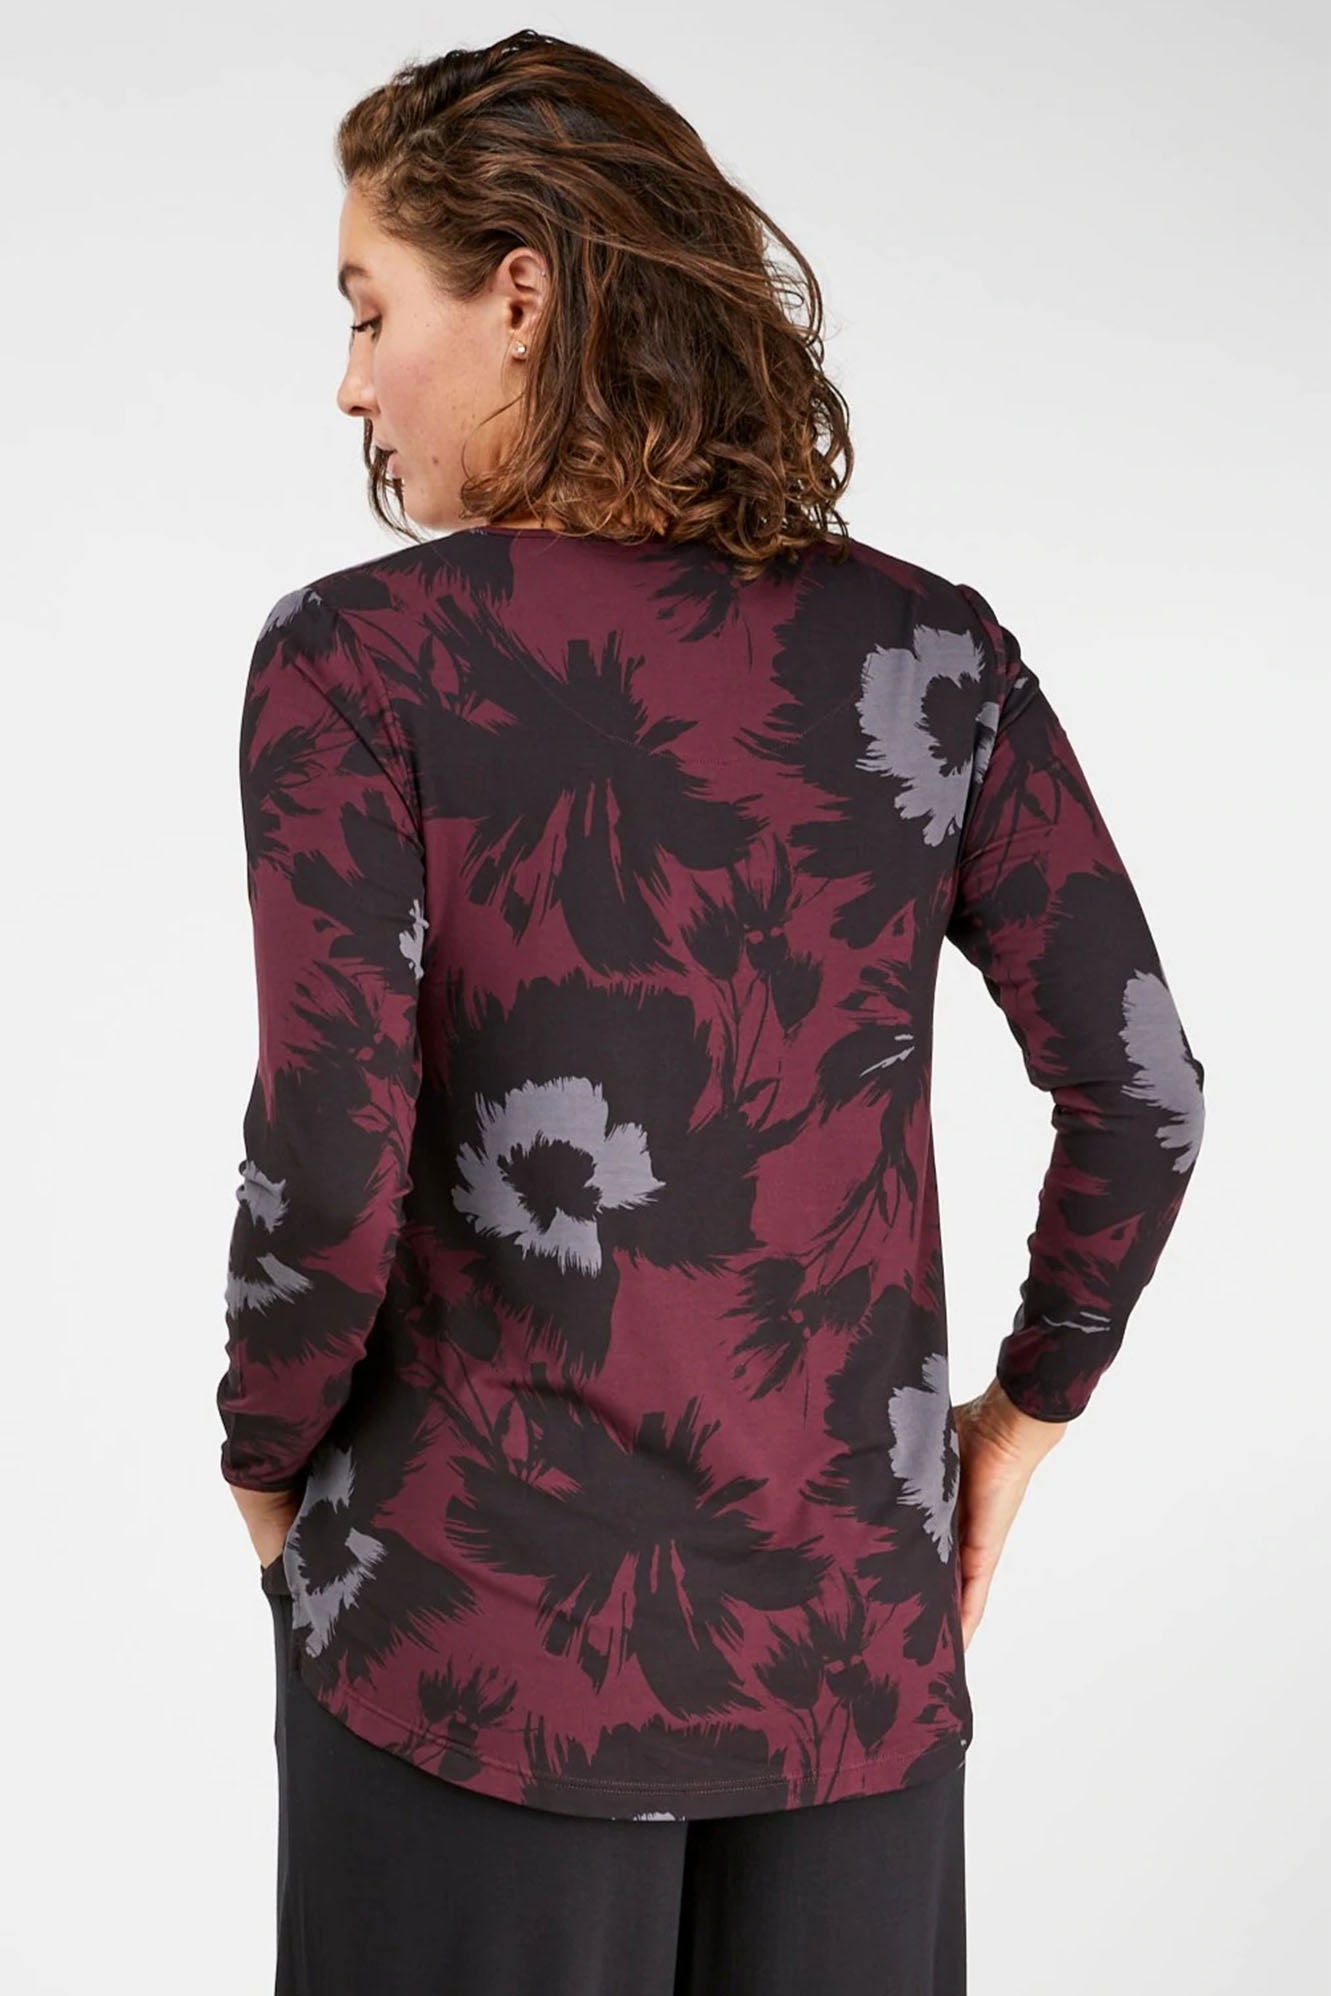 Woman wearing Tani Split Hem Relax Top 79410 in bloom print back view